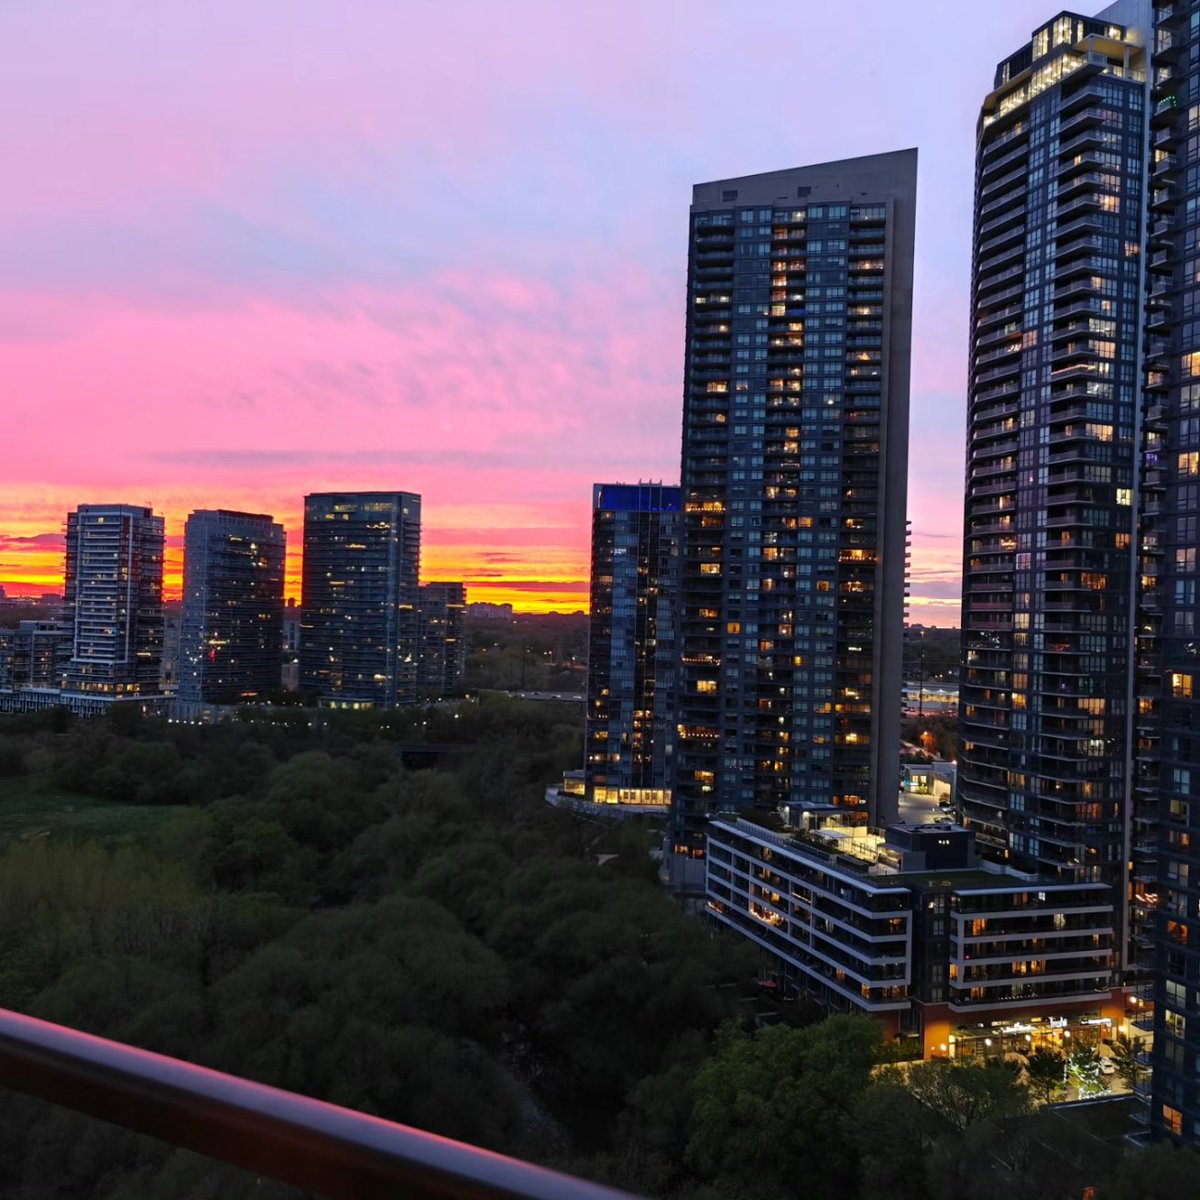 #Toronto #Canada 
Beautiful #sunset 
#sunsetphotography 
#SunsetObsession